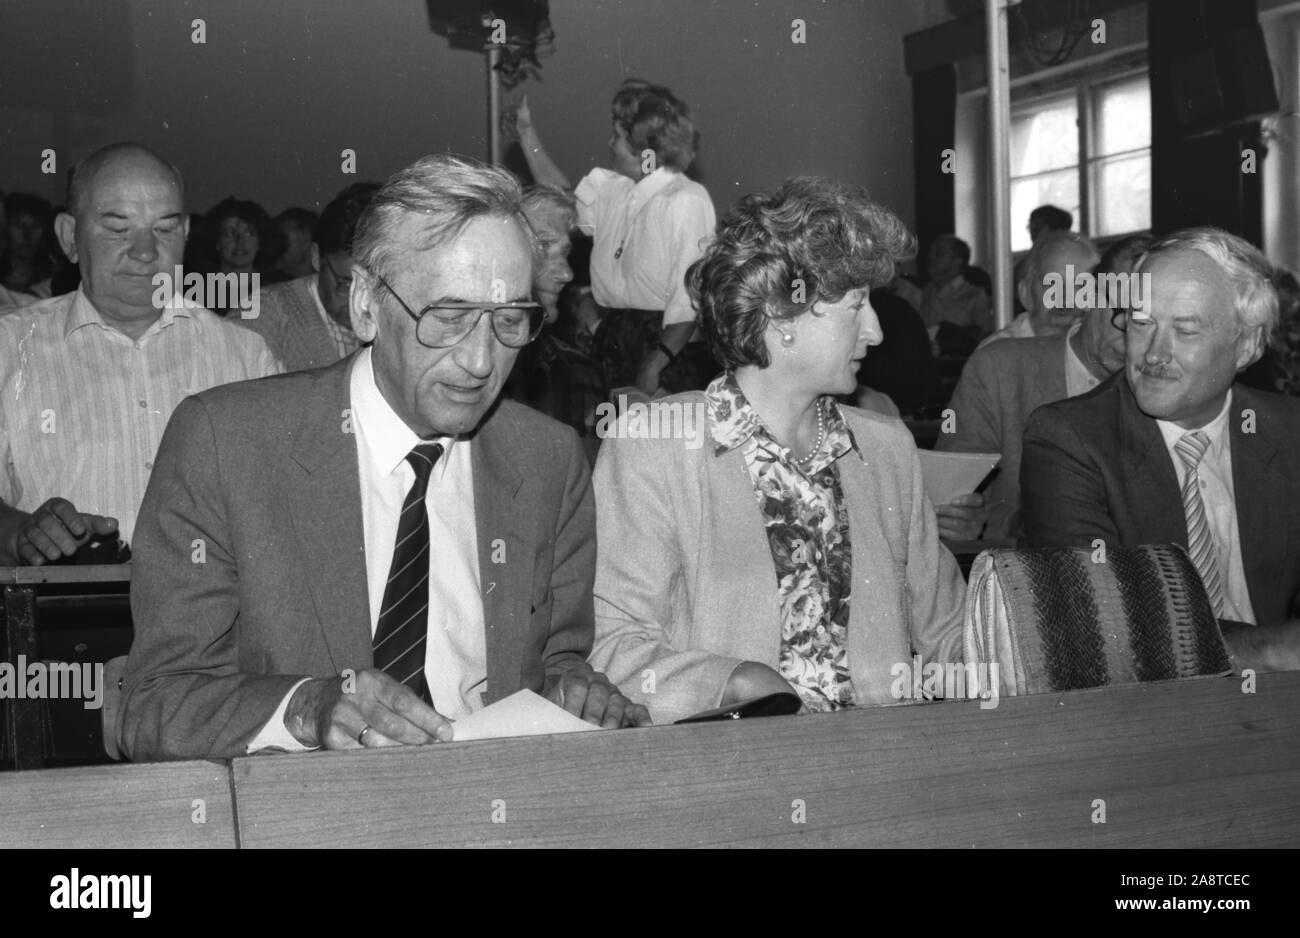 Two polish prime ministers, Tadeusz Mazowiecki and Hanna Suchocka, black and white archival photo. 1991, Poznan, Poland. Stock Photo